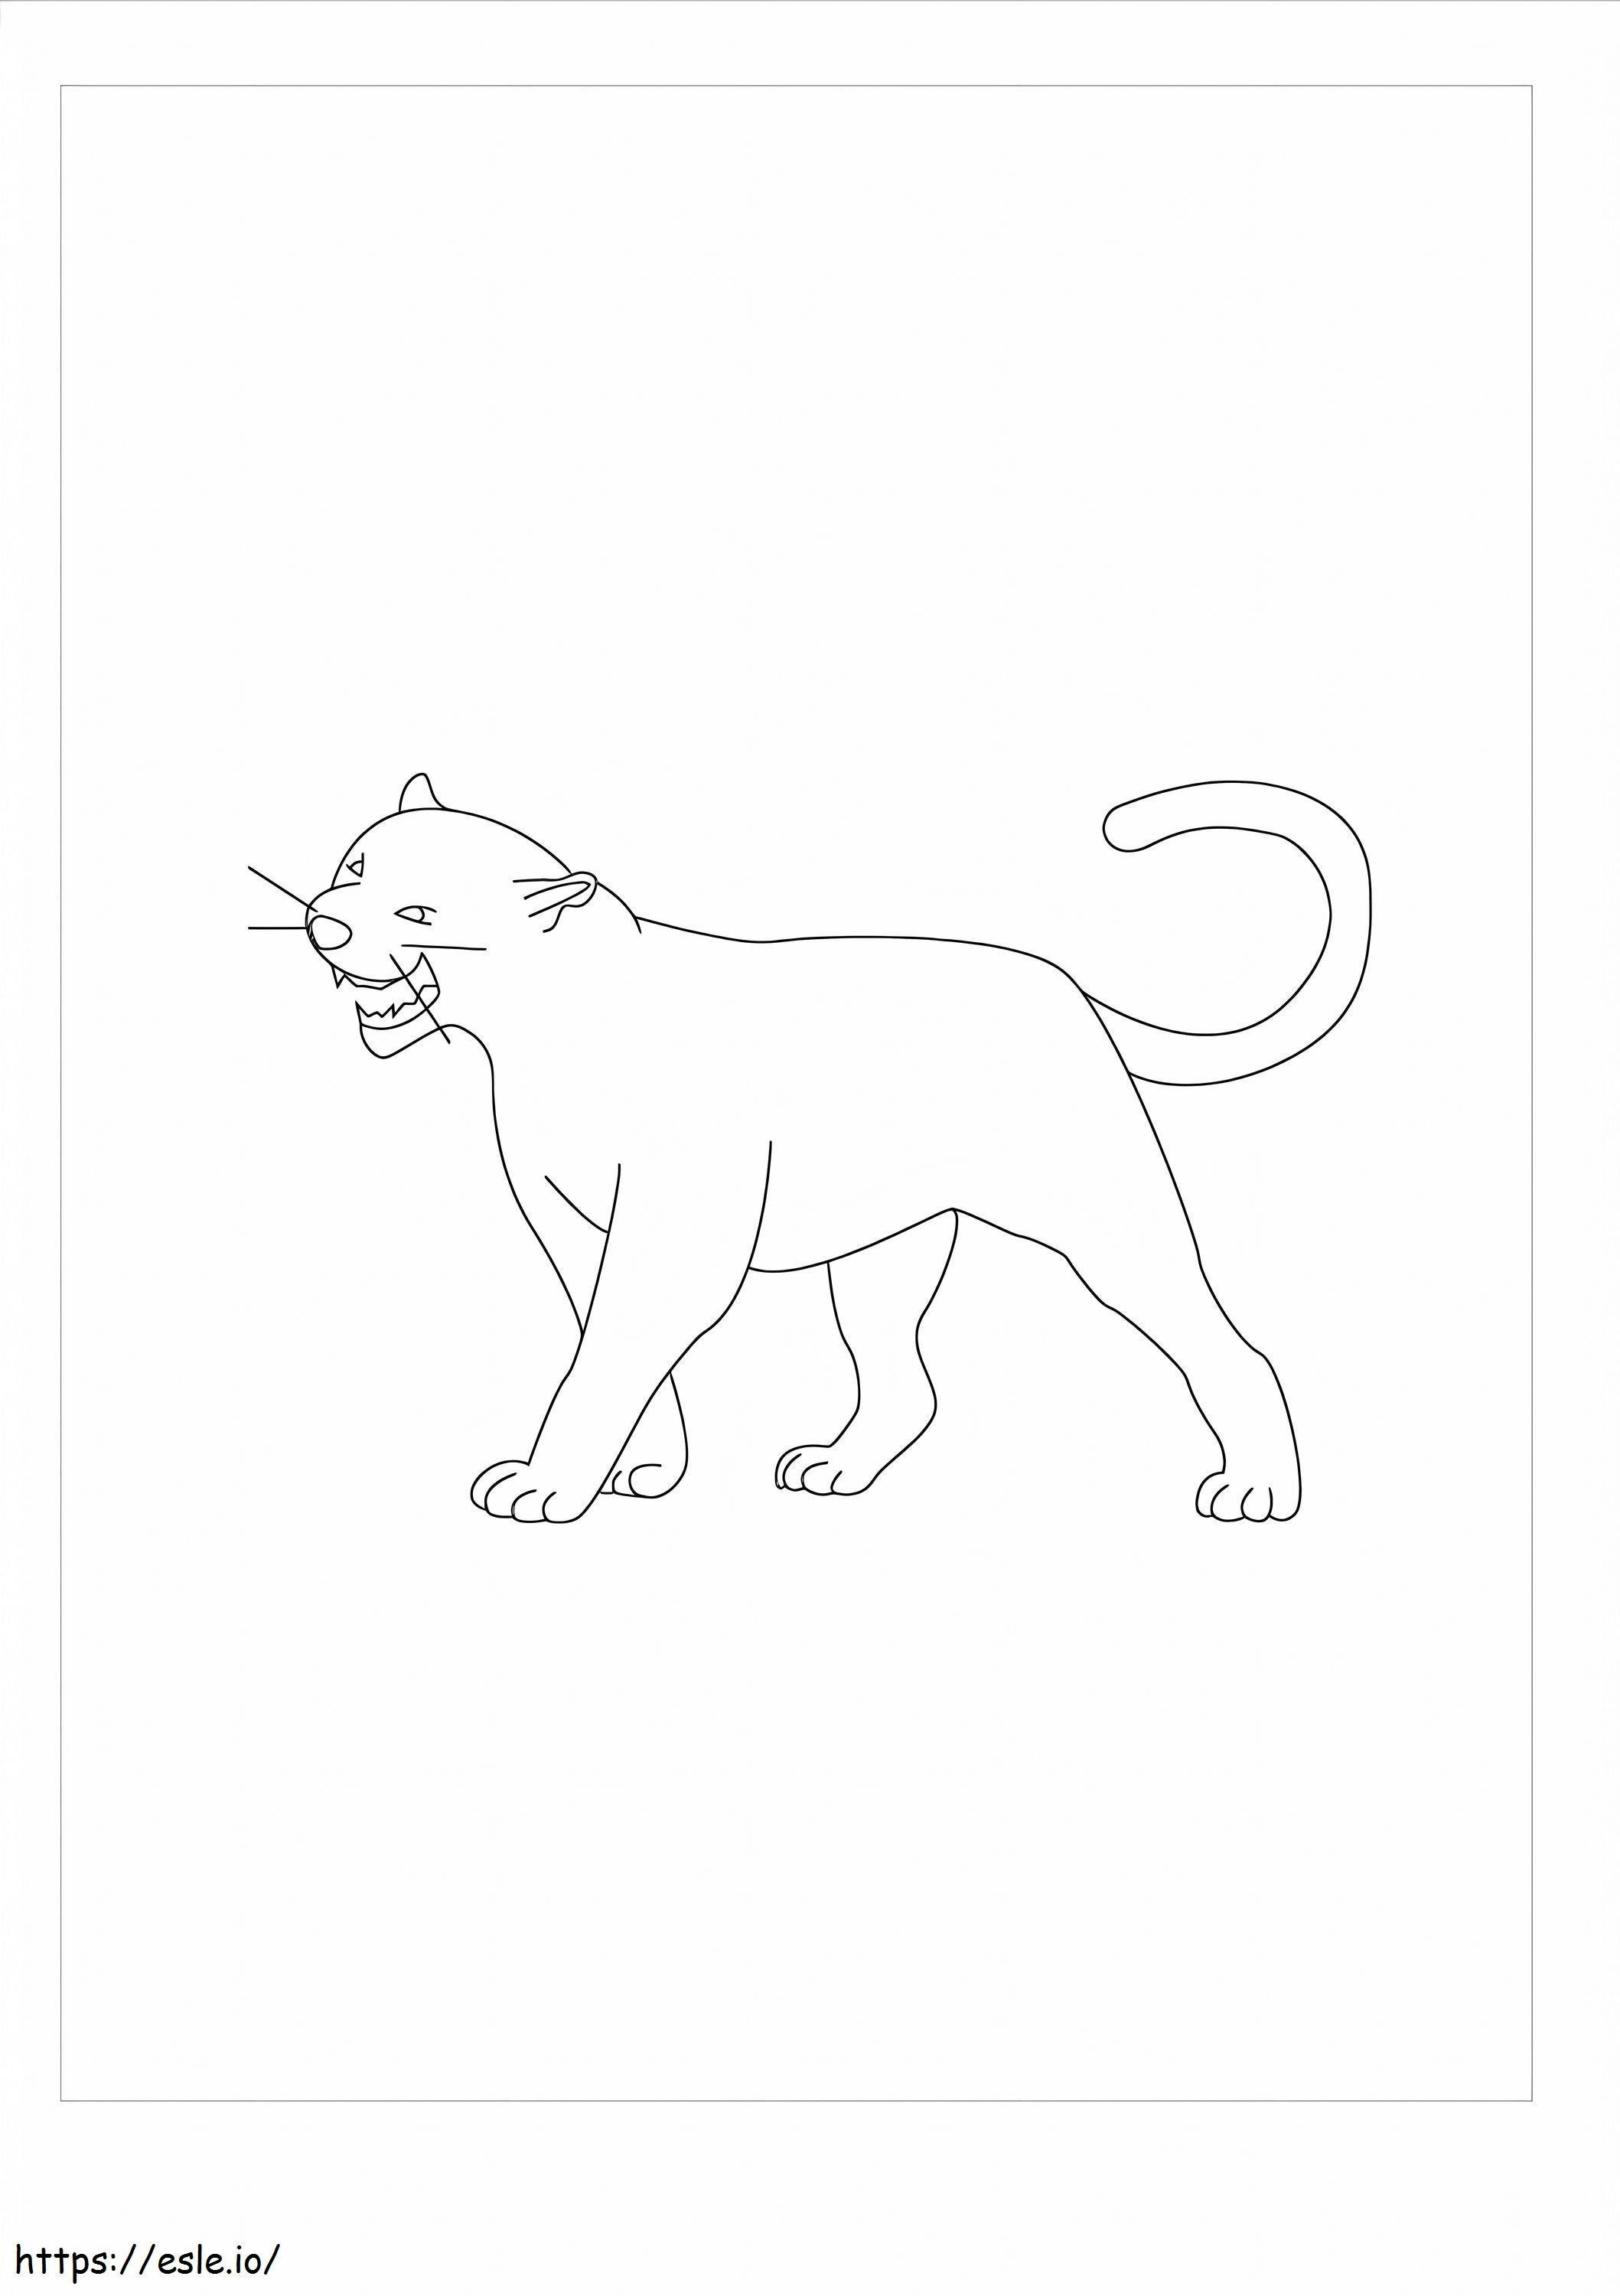 Printable Cougar coloring page